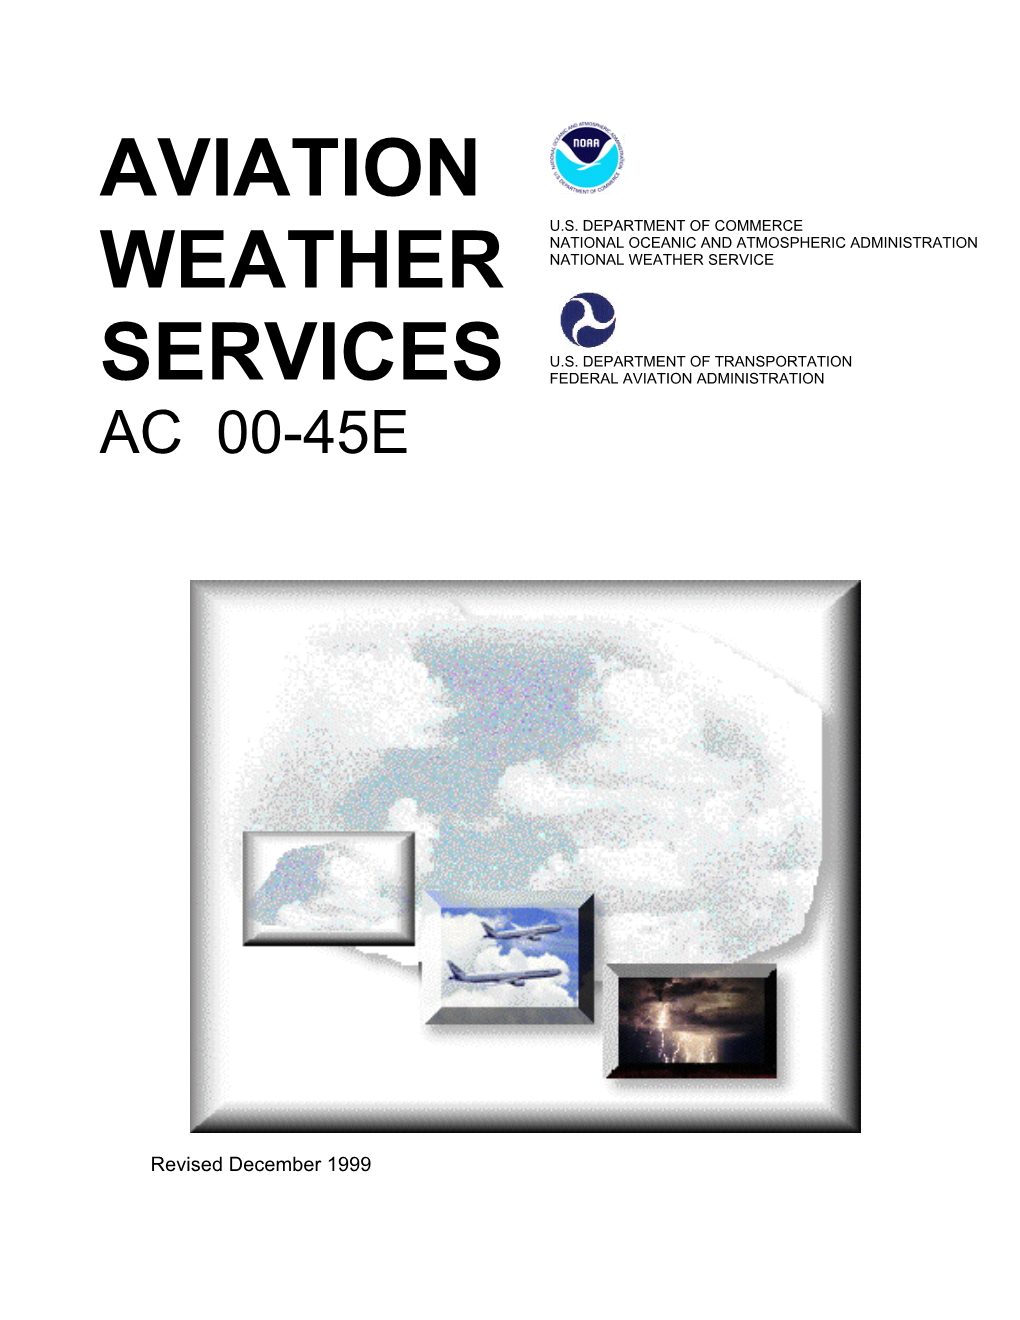 Advisory Circular 00-45E Aviation Weather Services